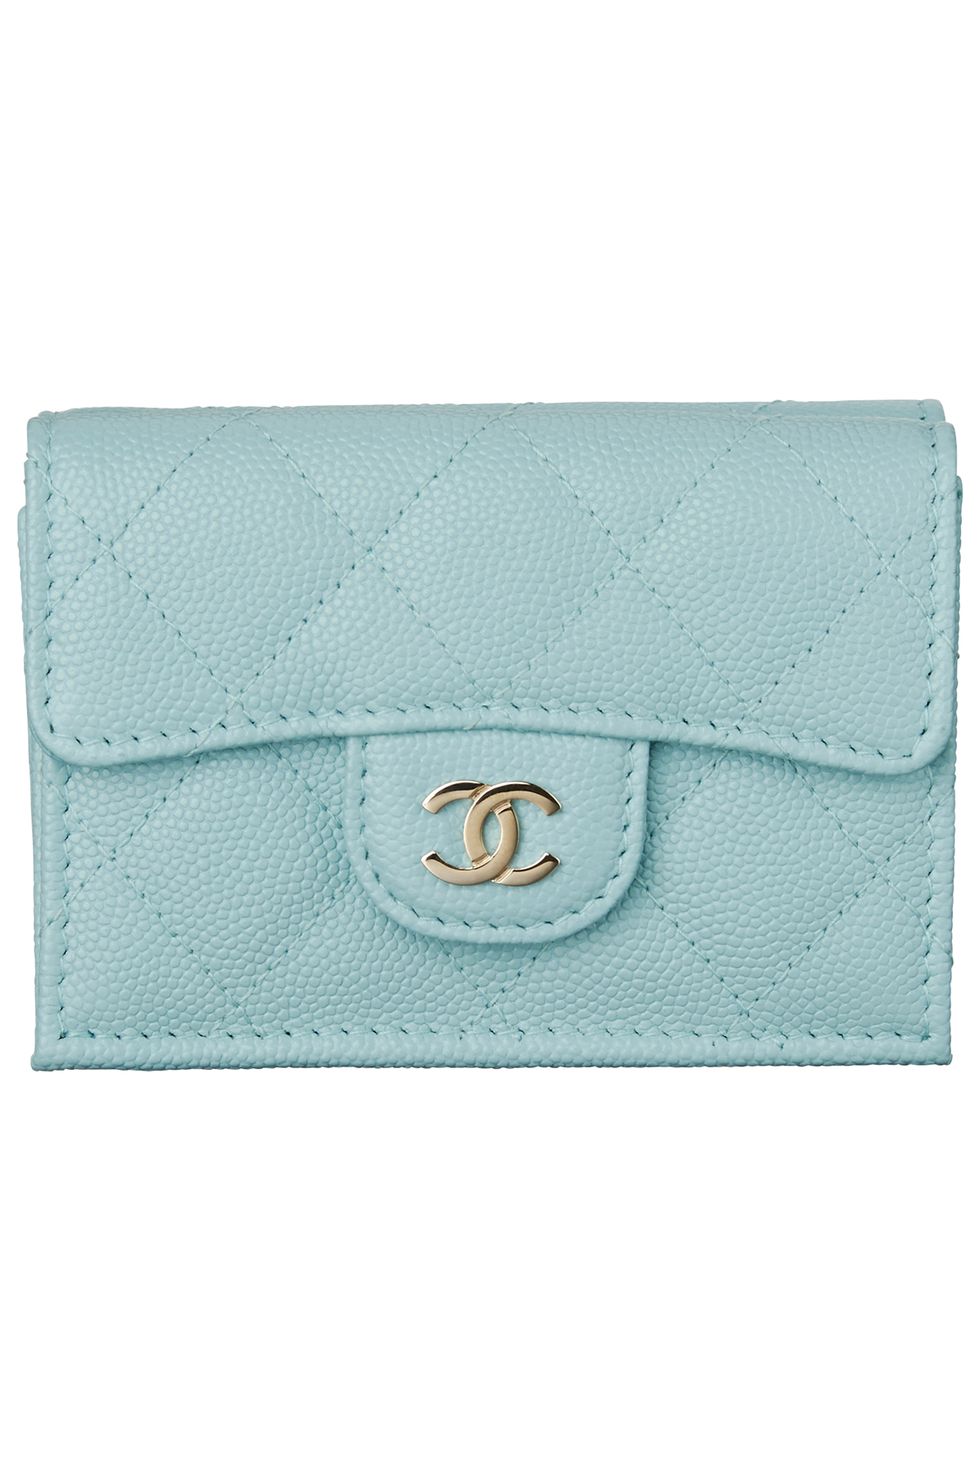 Wallet, Turquoise, Fashion accessory, Aqua, Coin purse, Leather, Rectangle, 